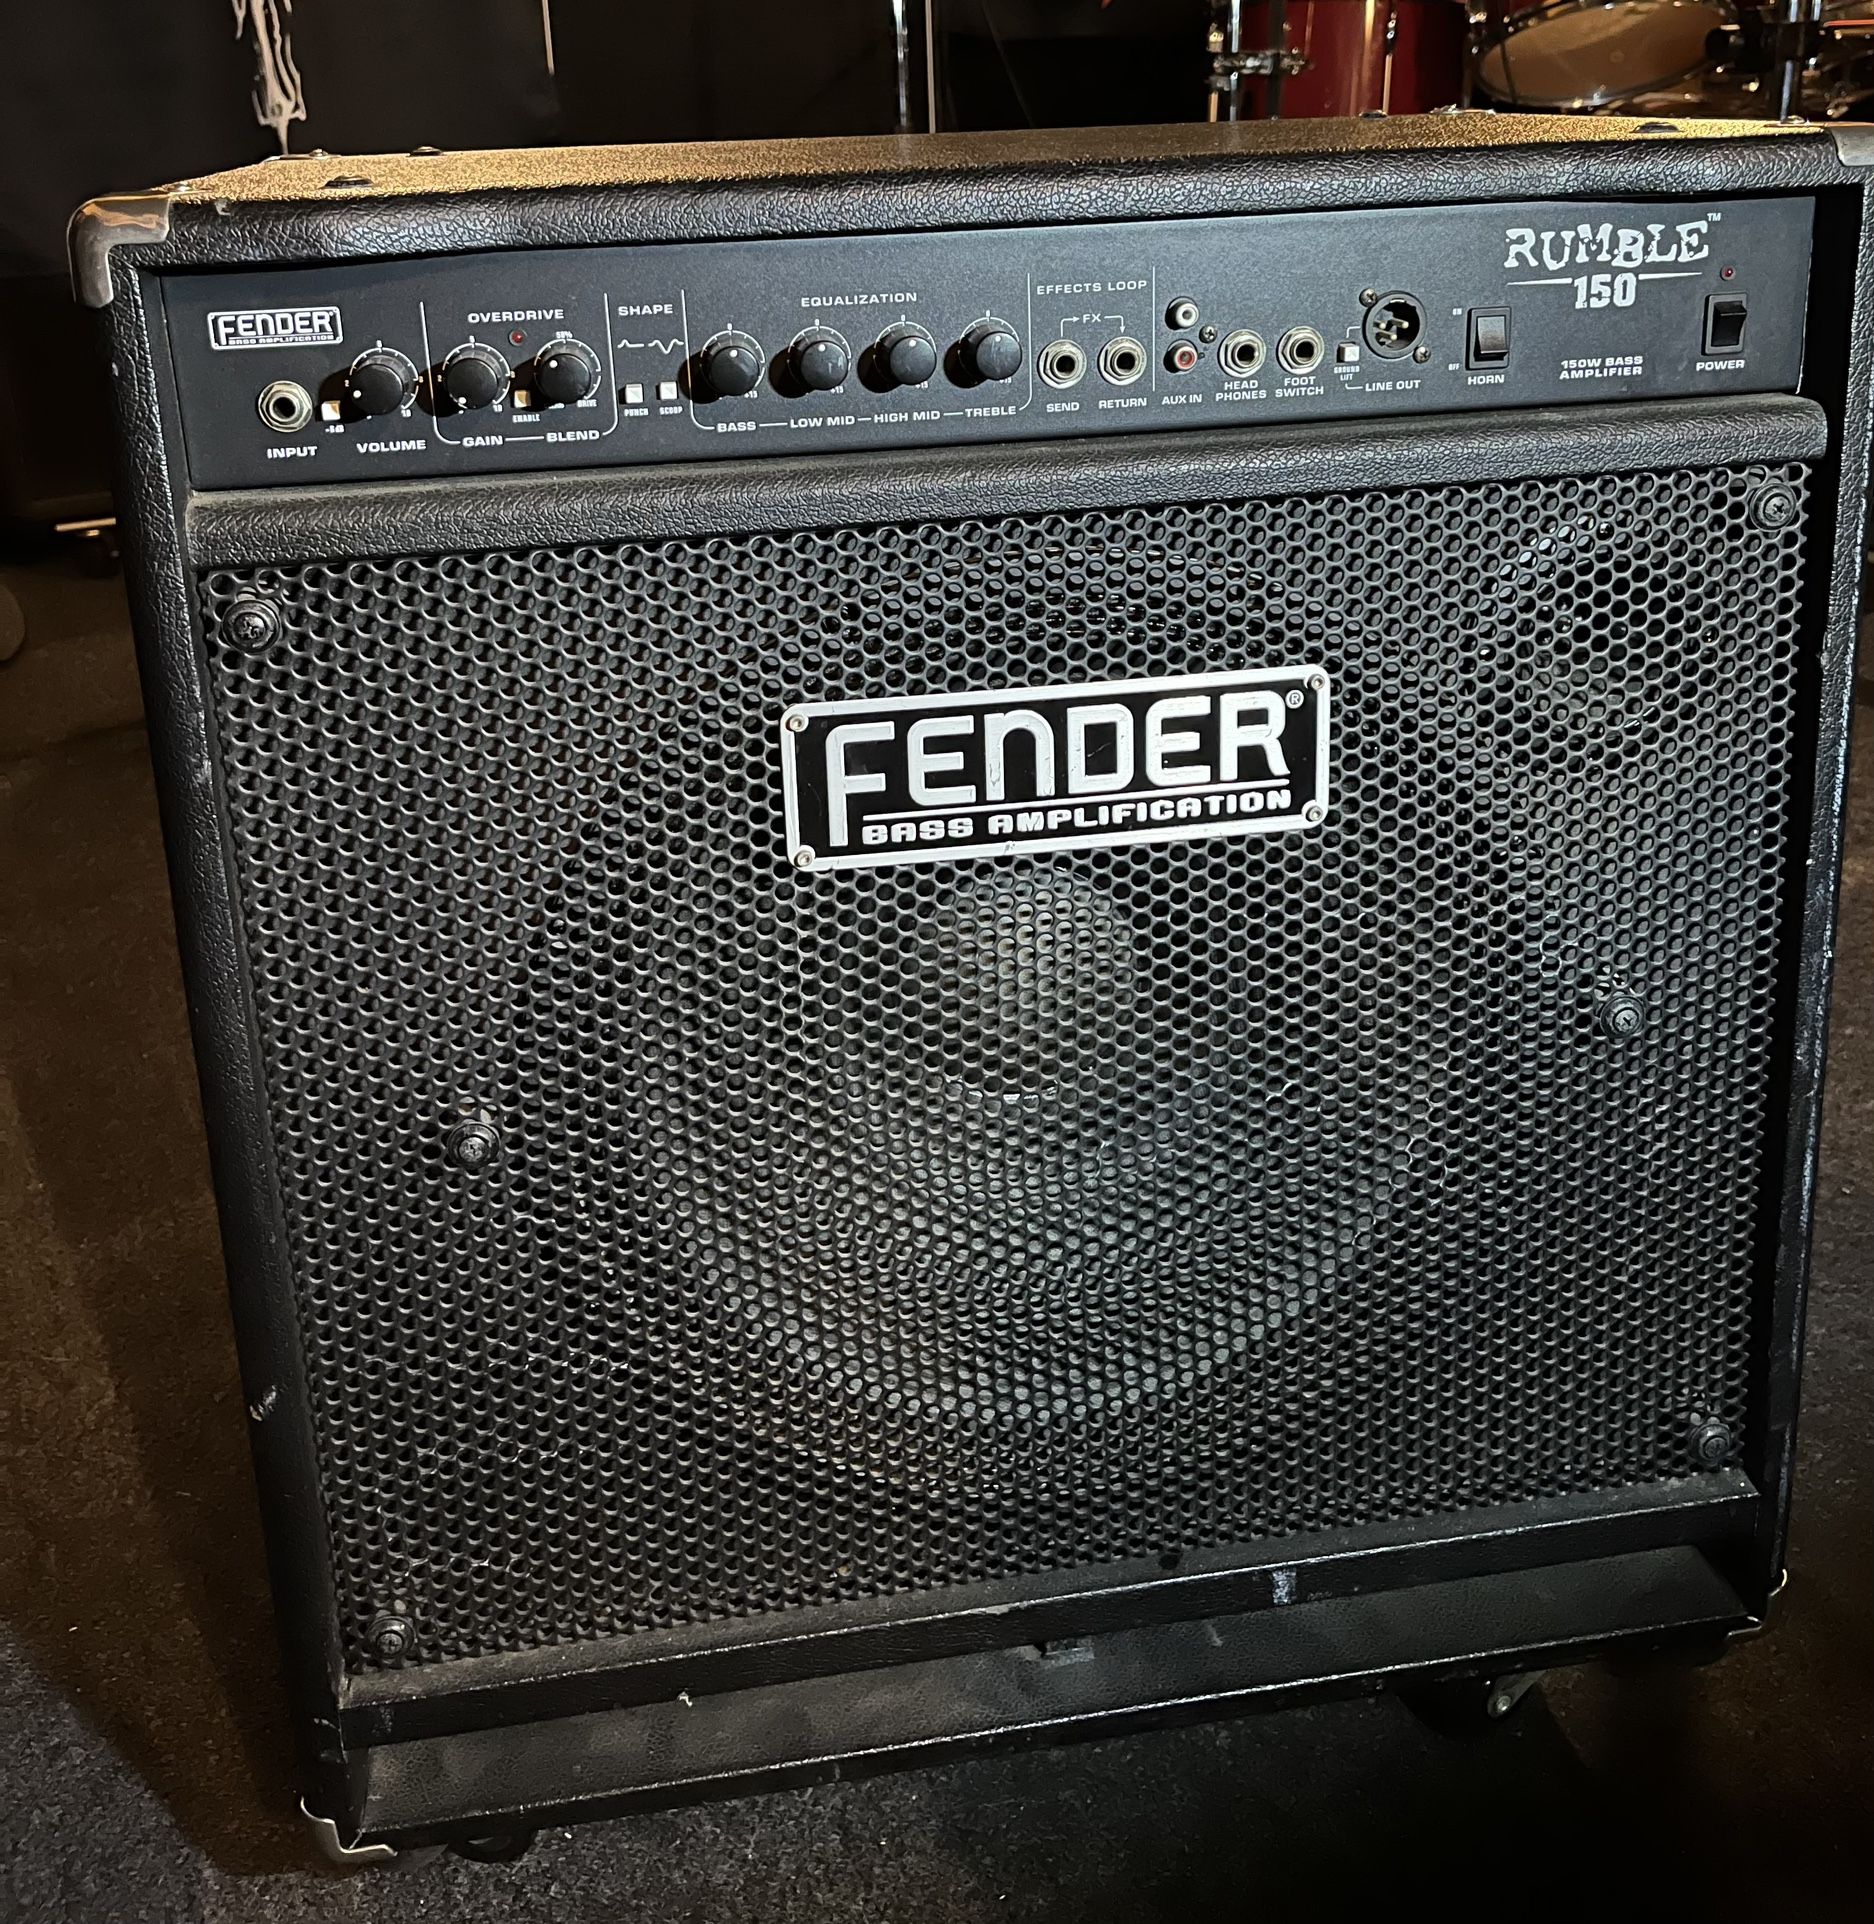 Fender Rumble 150 Bass Amp.